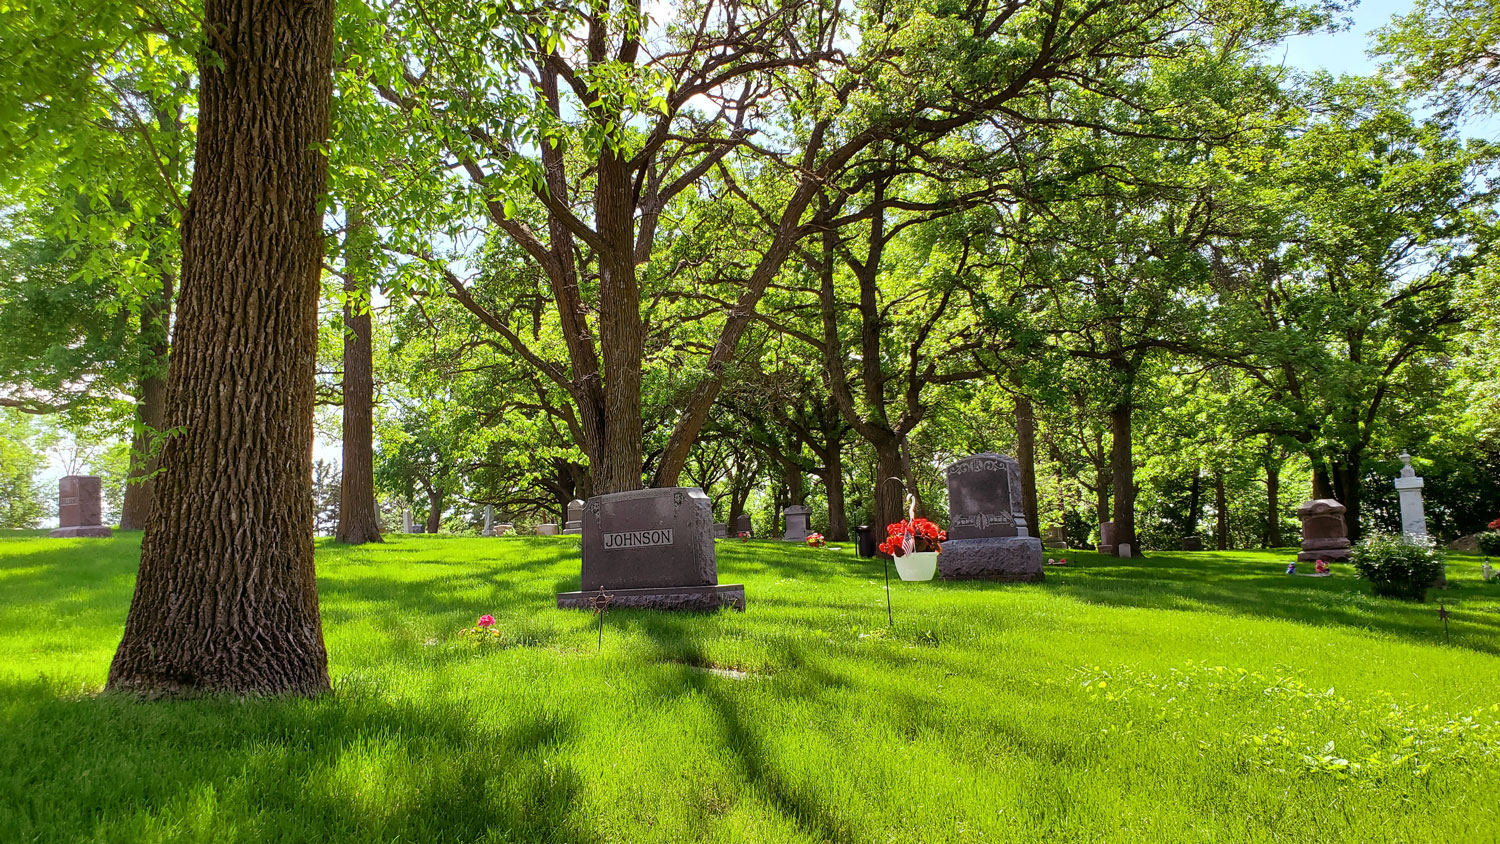 Graves lie under under beautiful shade trees.